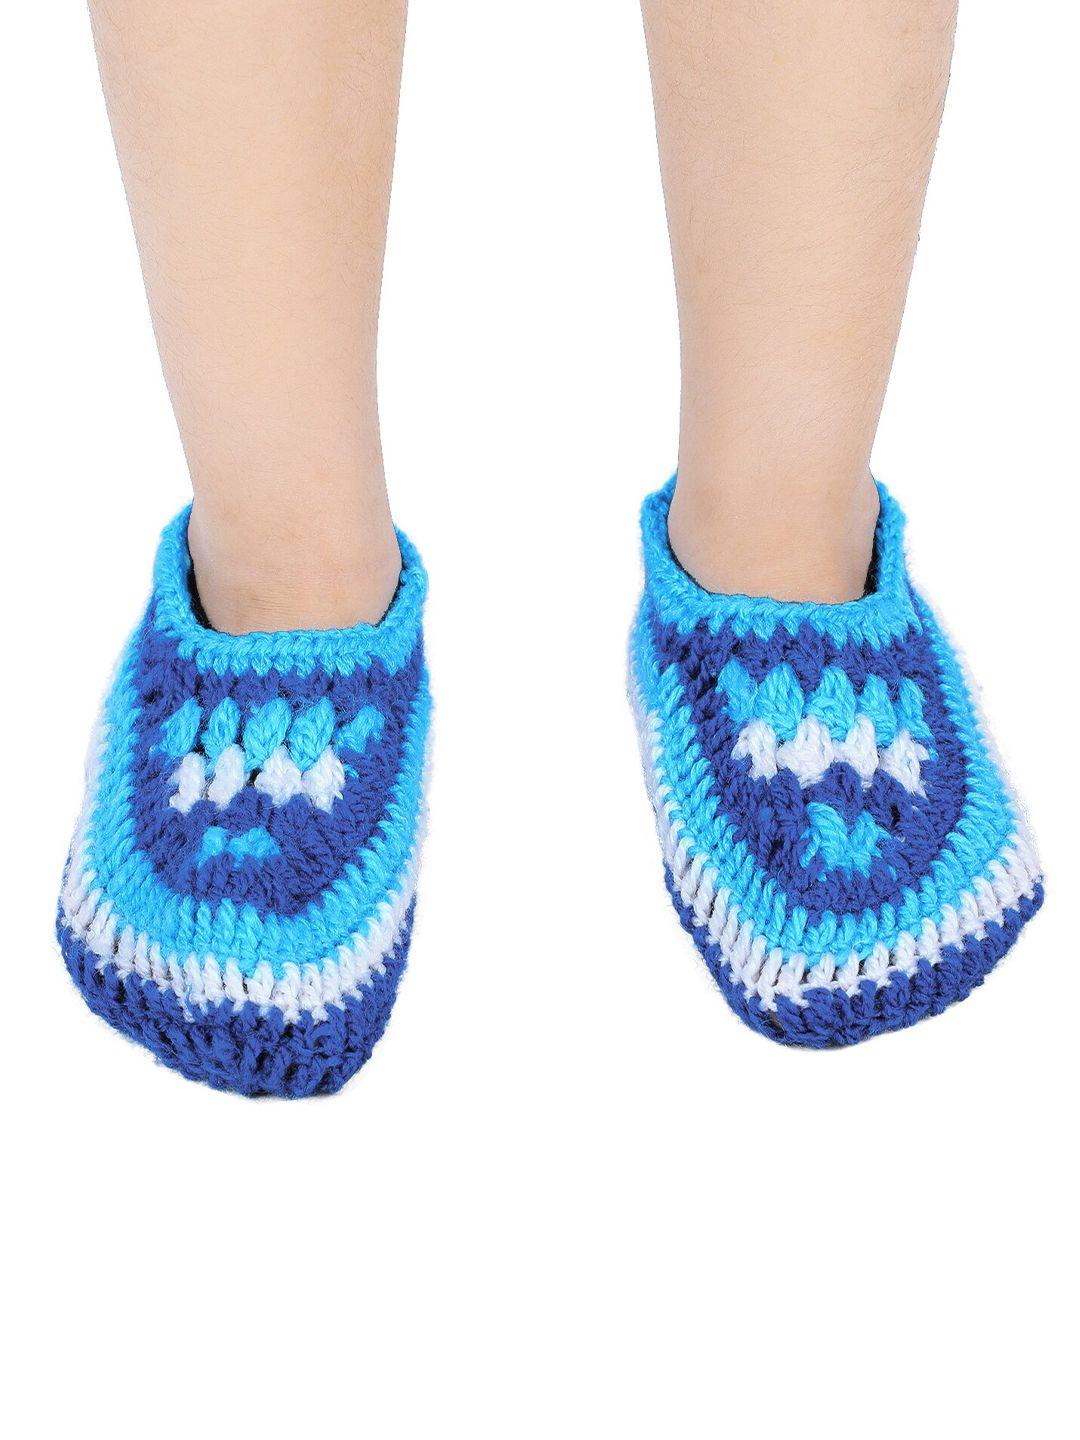 bharatasya girls blue & white patterned ankle length socks